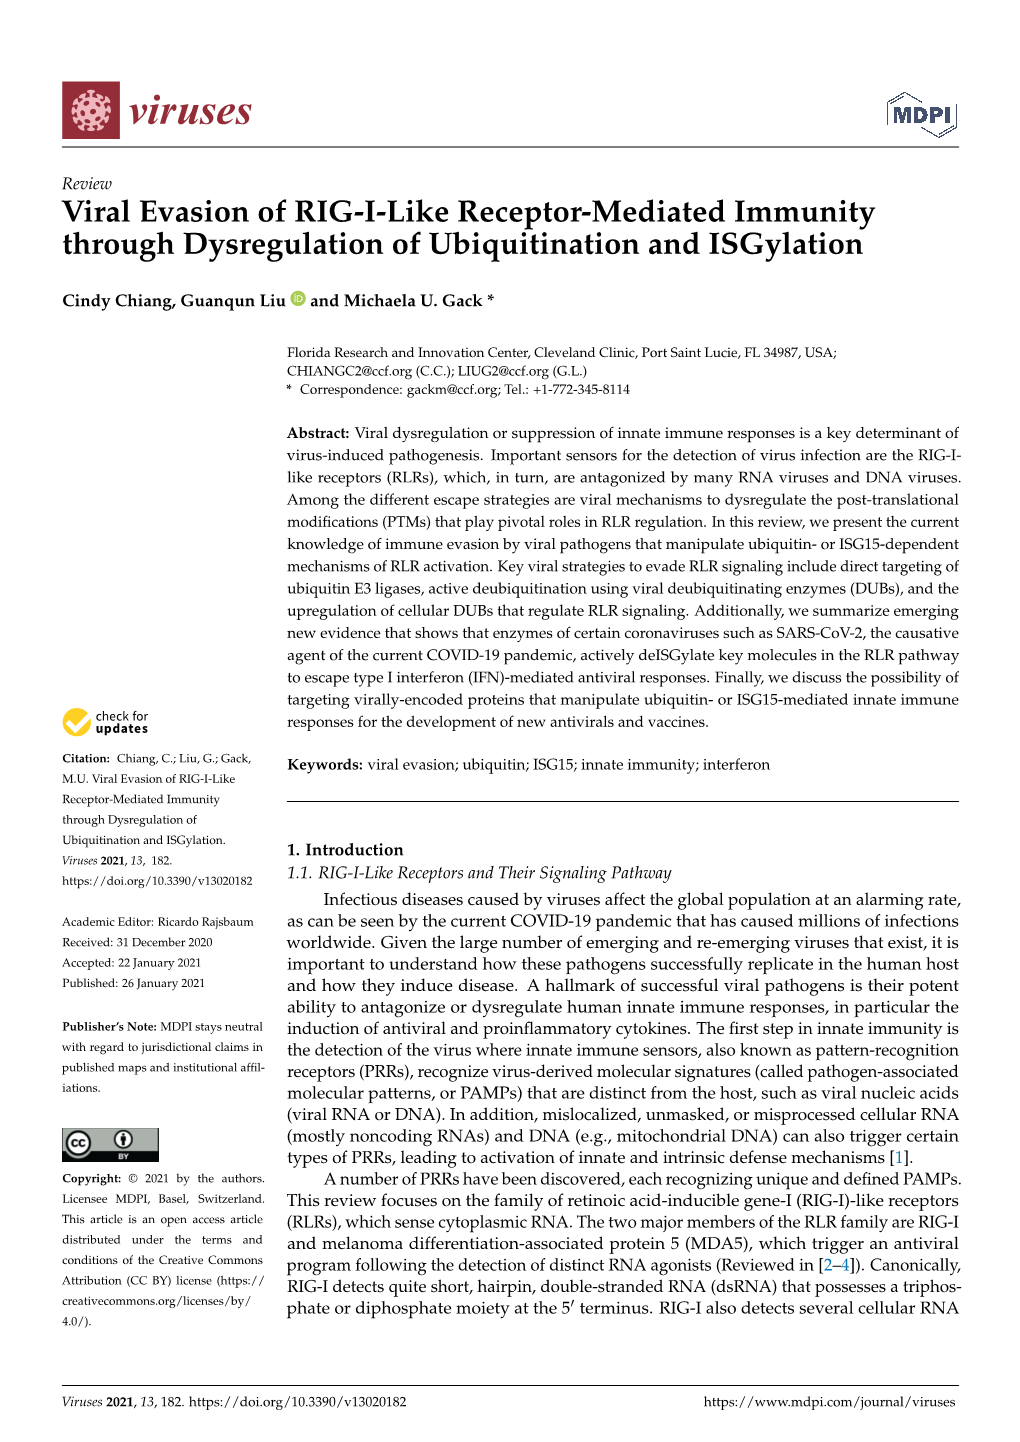 Viral Evasion of RIG-I-Like Receptor-Mediated Immunity Through Dysregulation of Ubiquitination and Isgylation